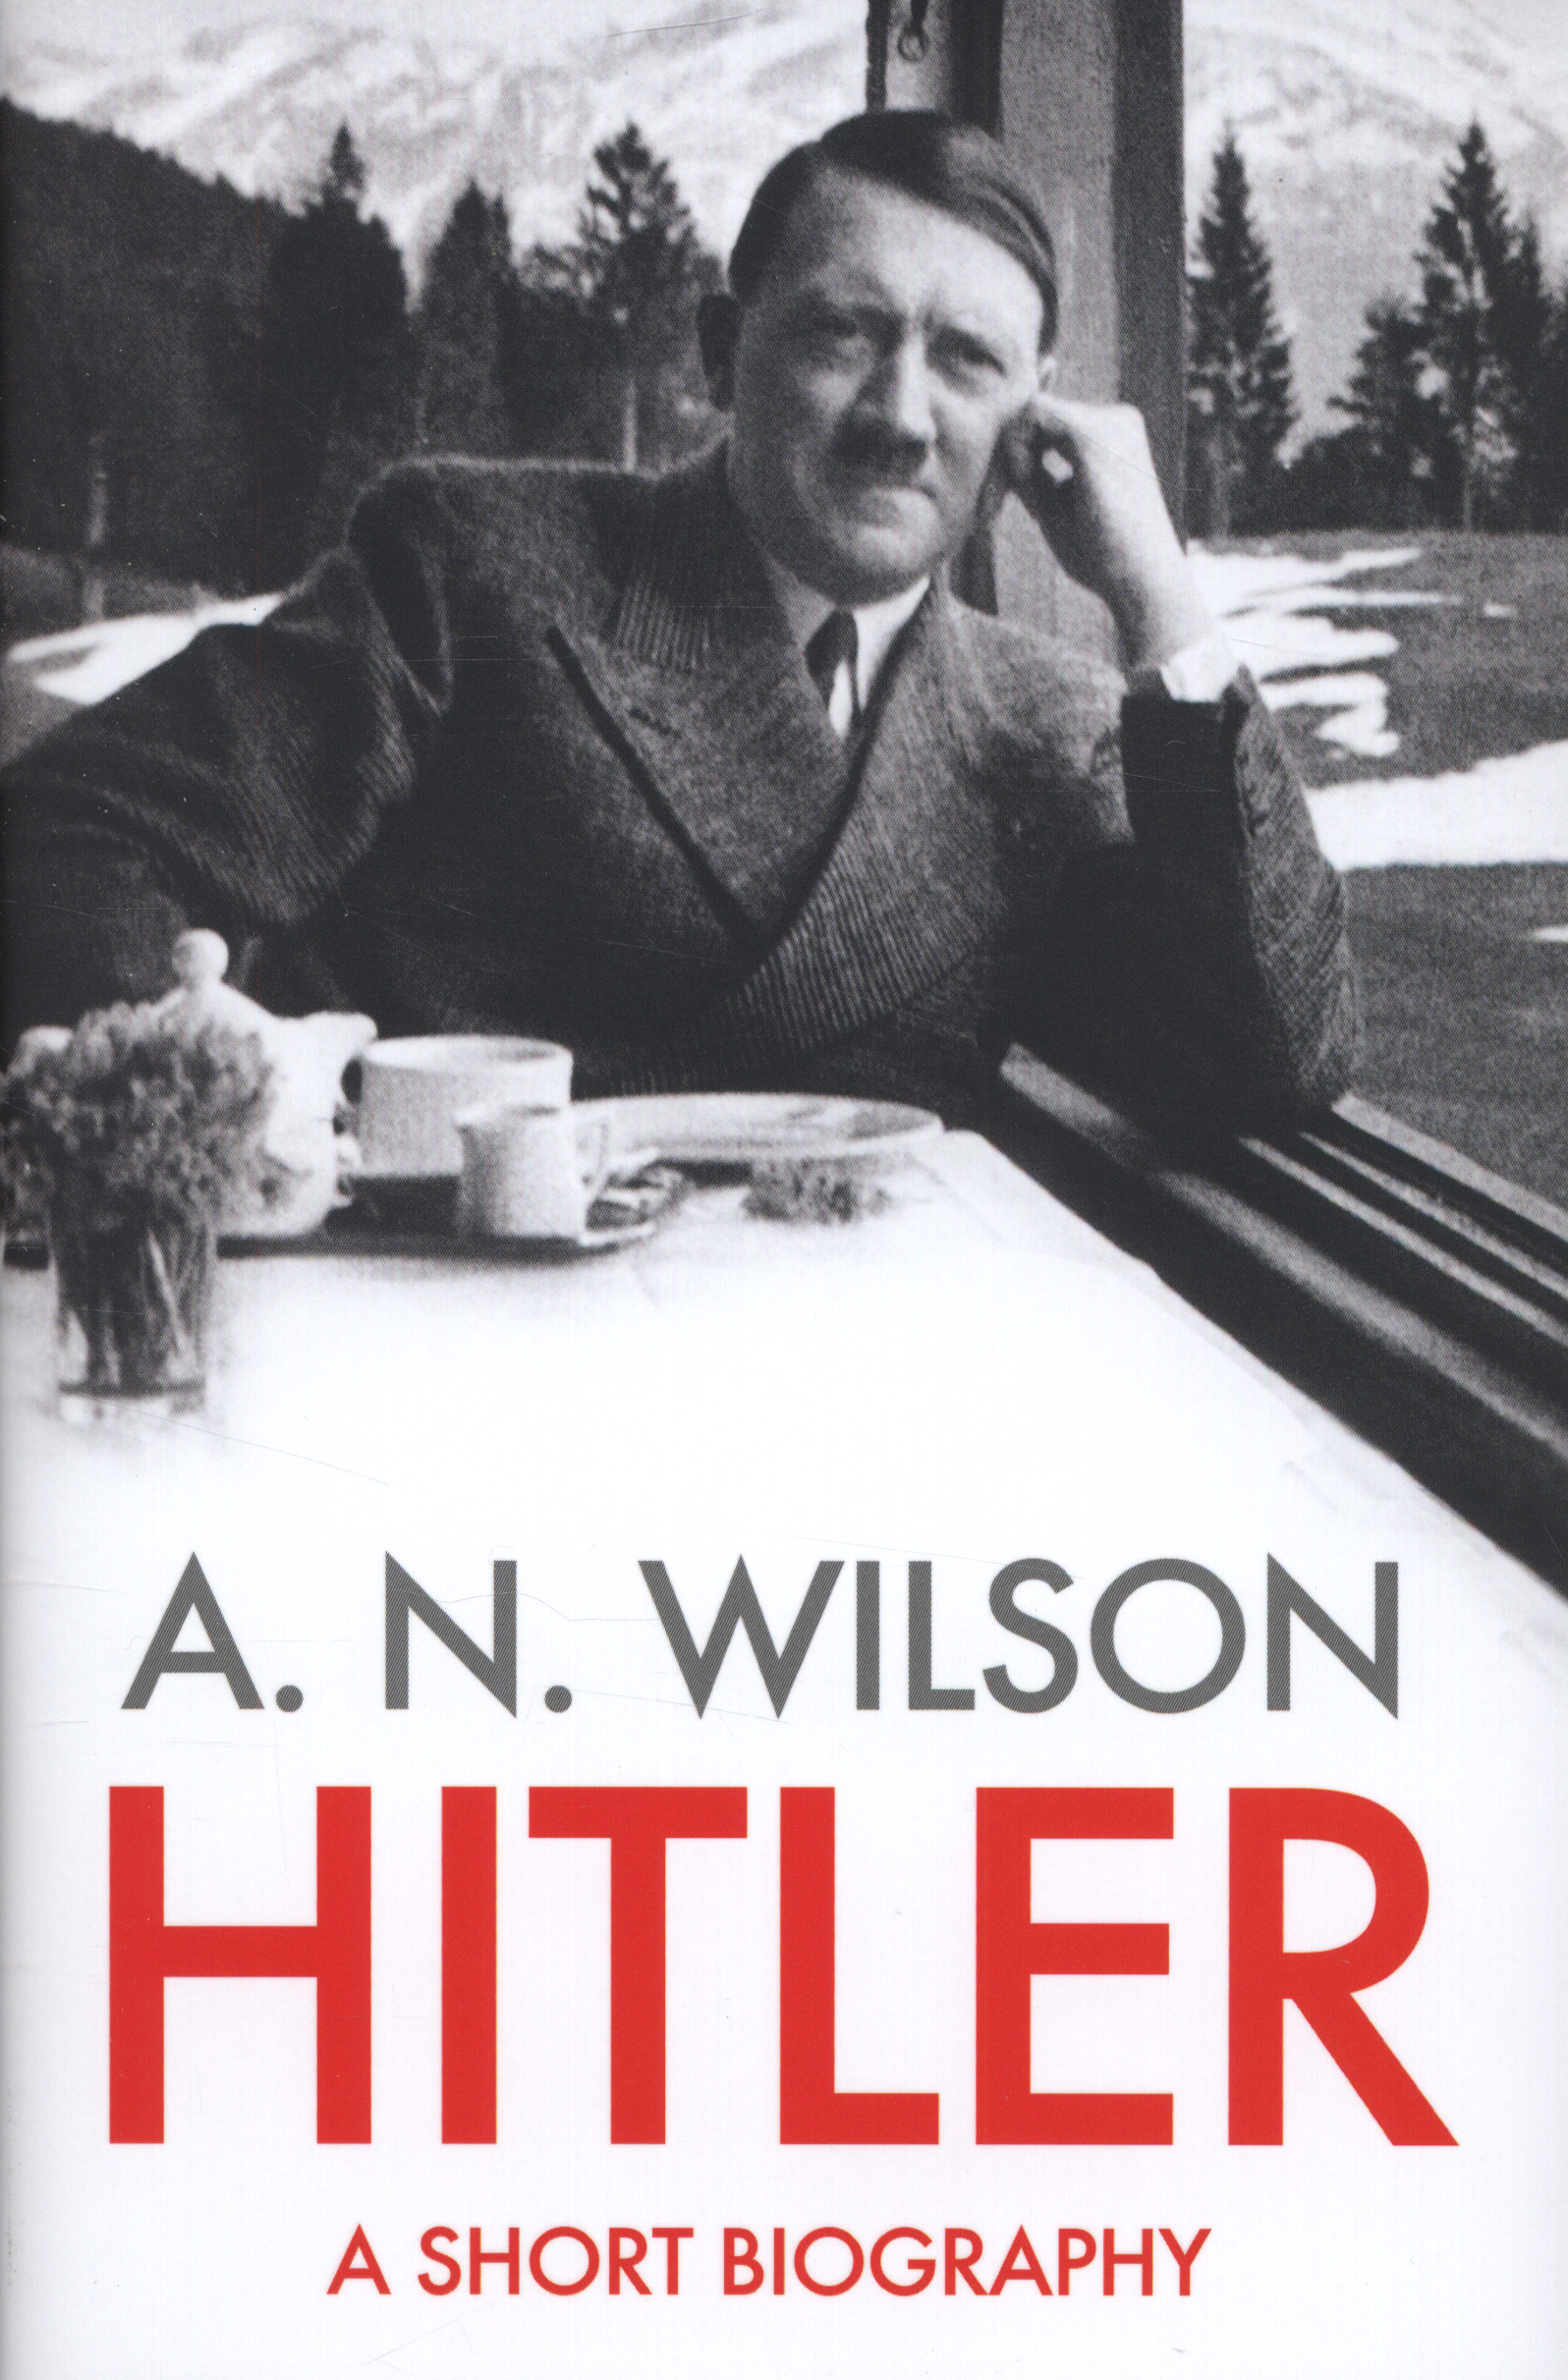 short biography about hitler